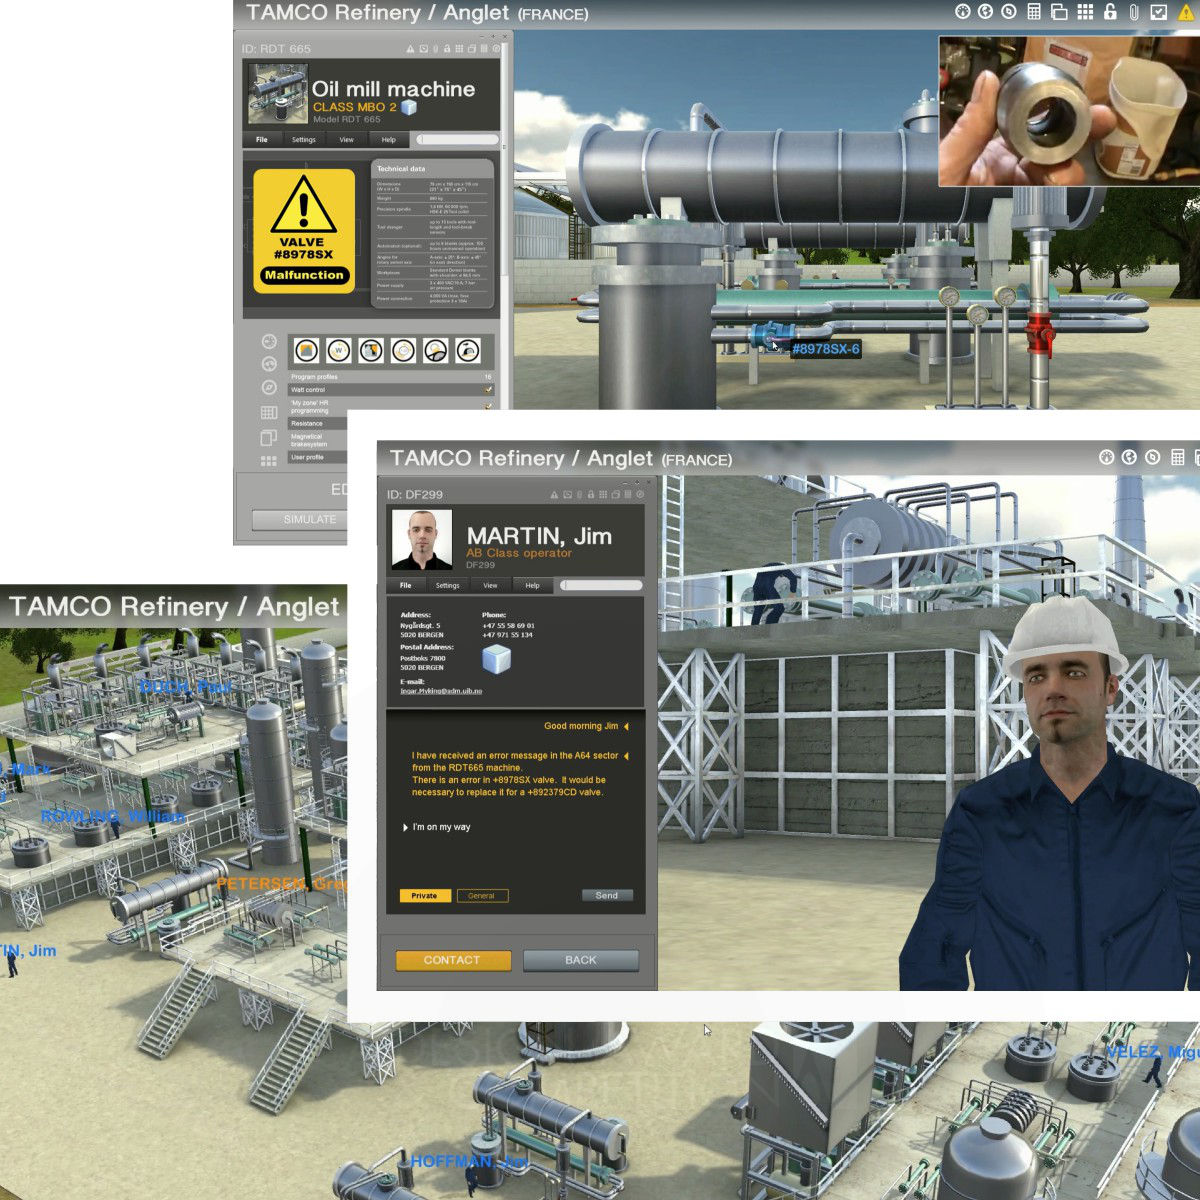 Jim Novack Collaborative Cloud 3D World for Working